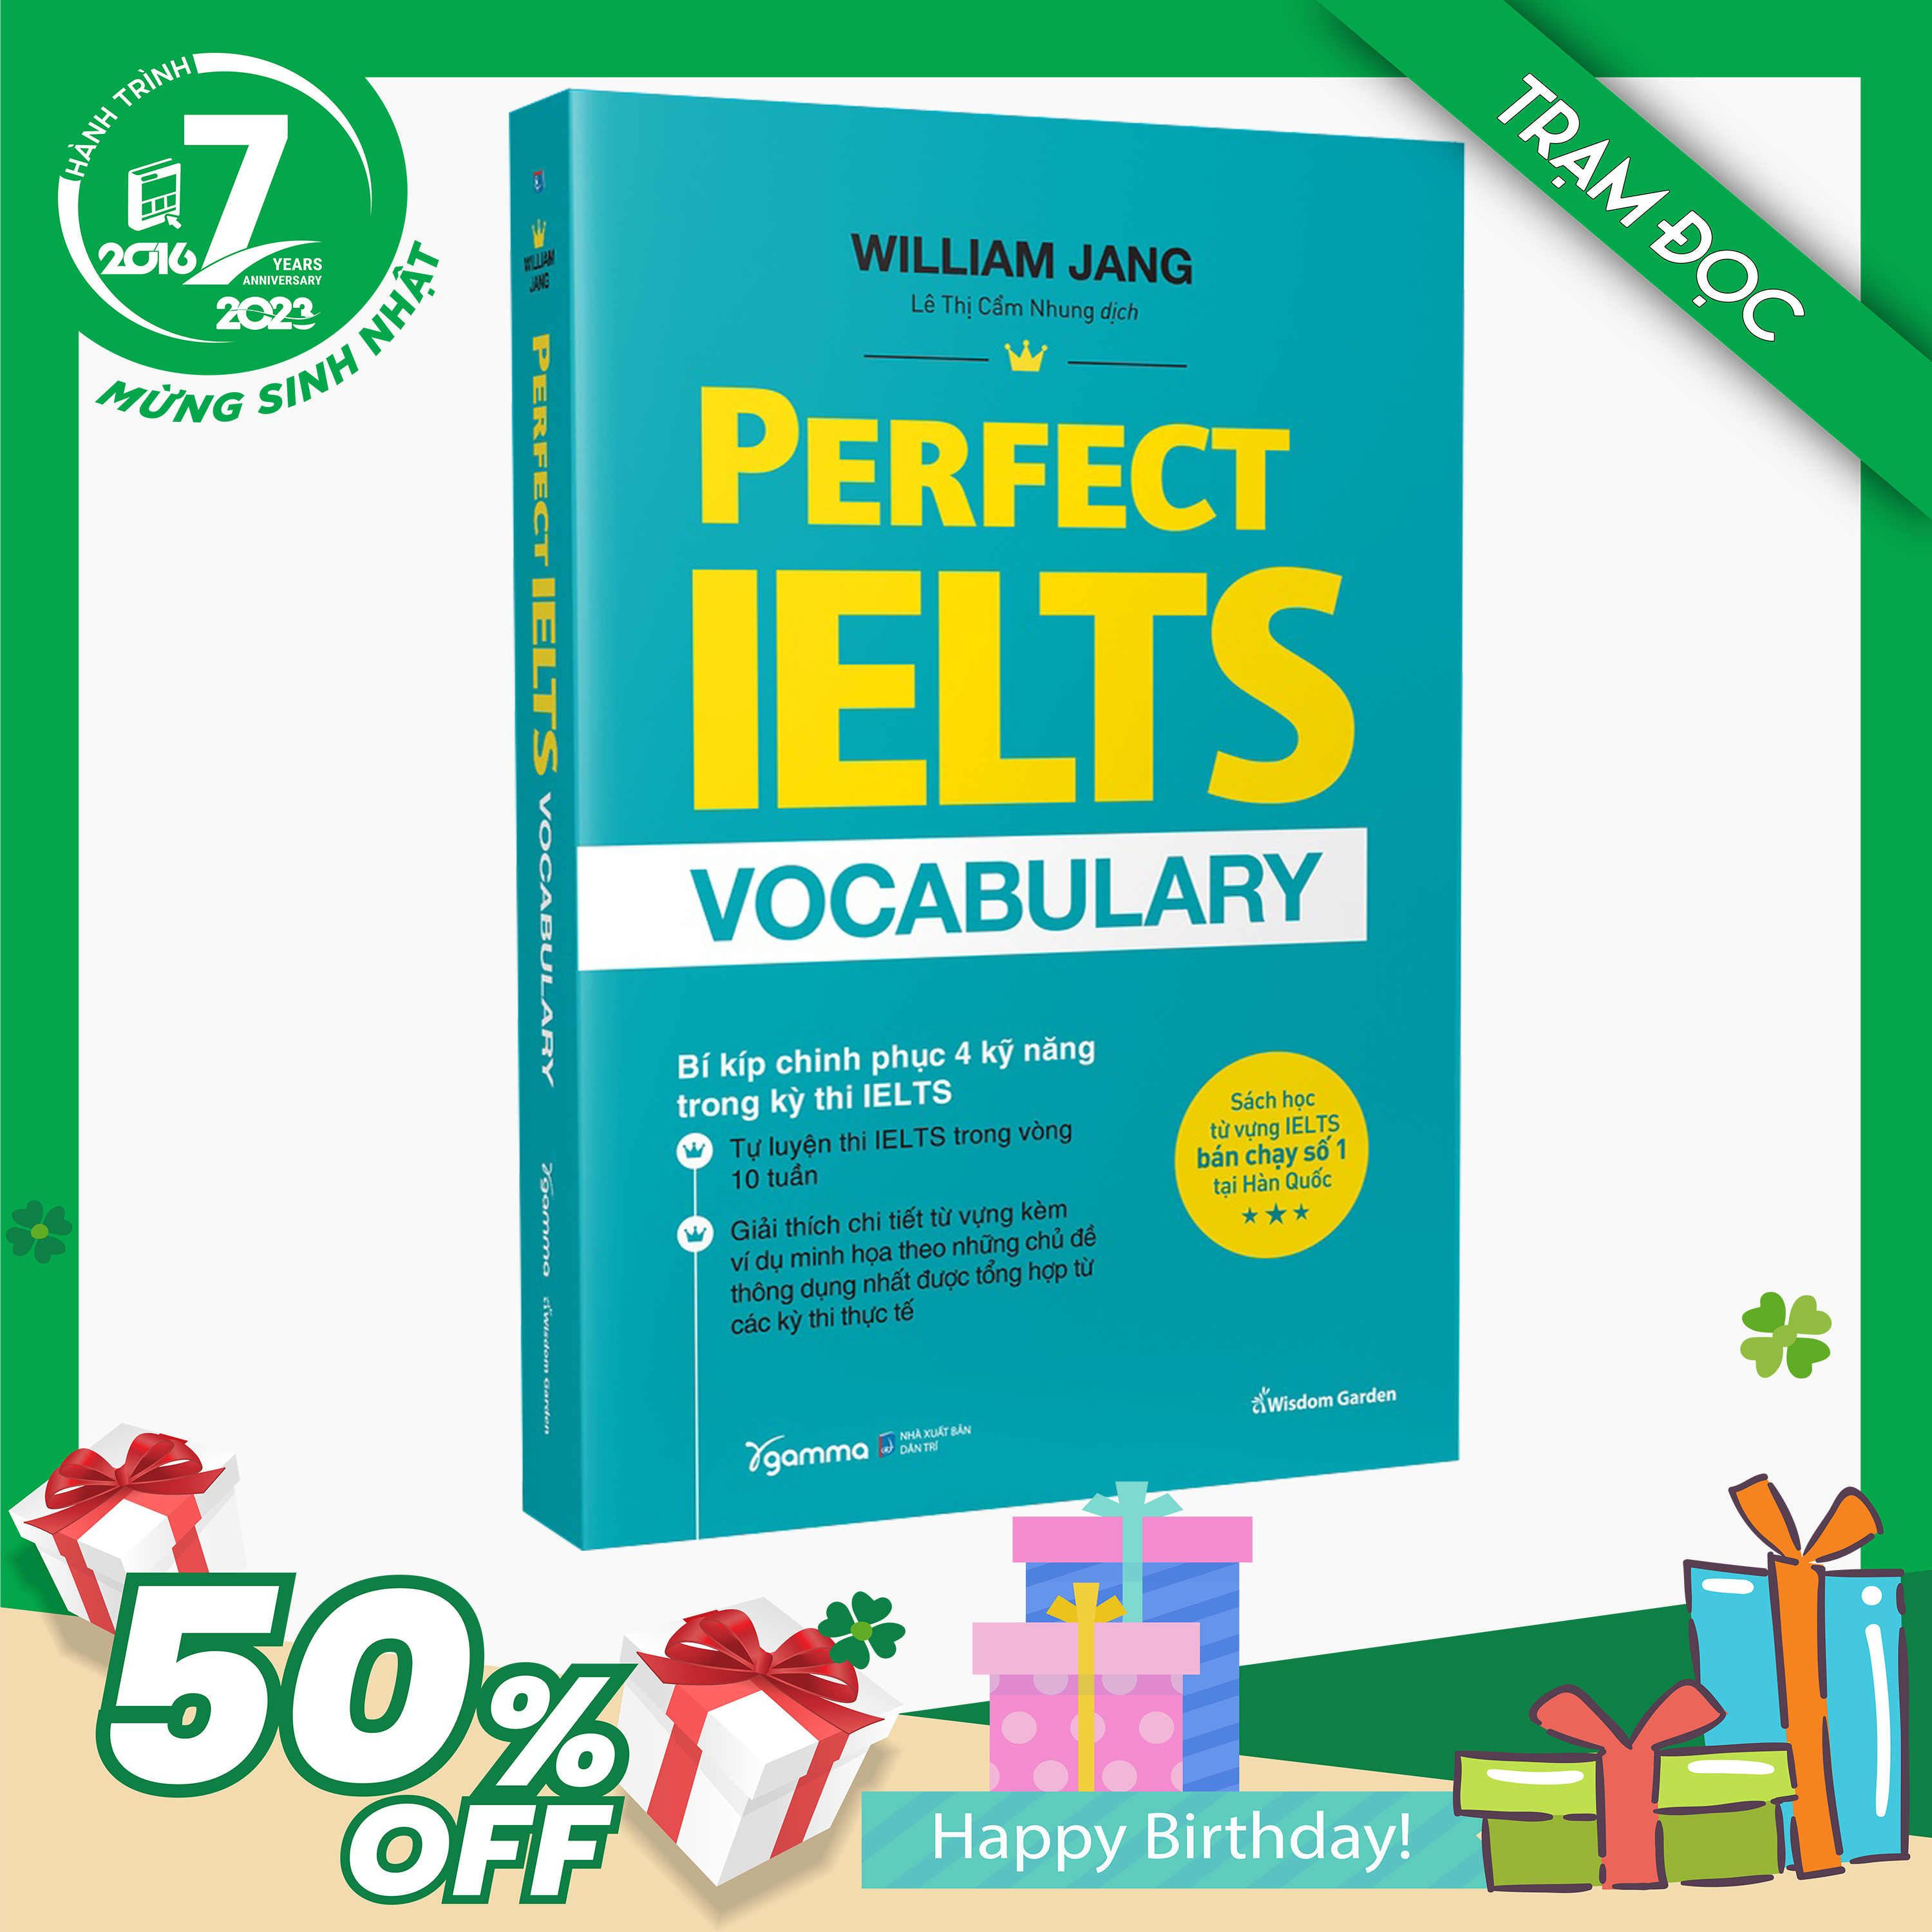 Trạm Đọc Official | Perfect Ielts Vocabulary (Tái Bản)